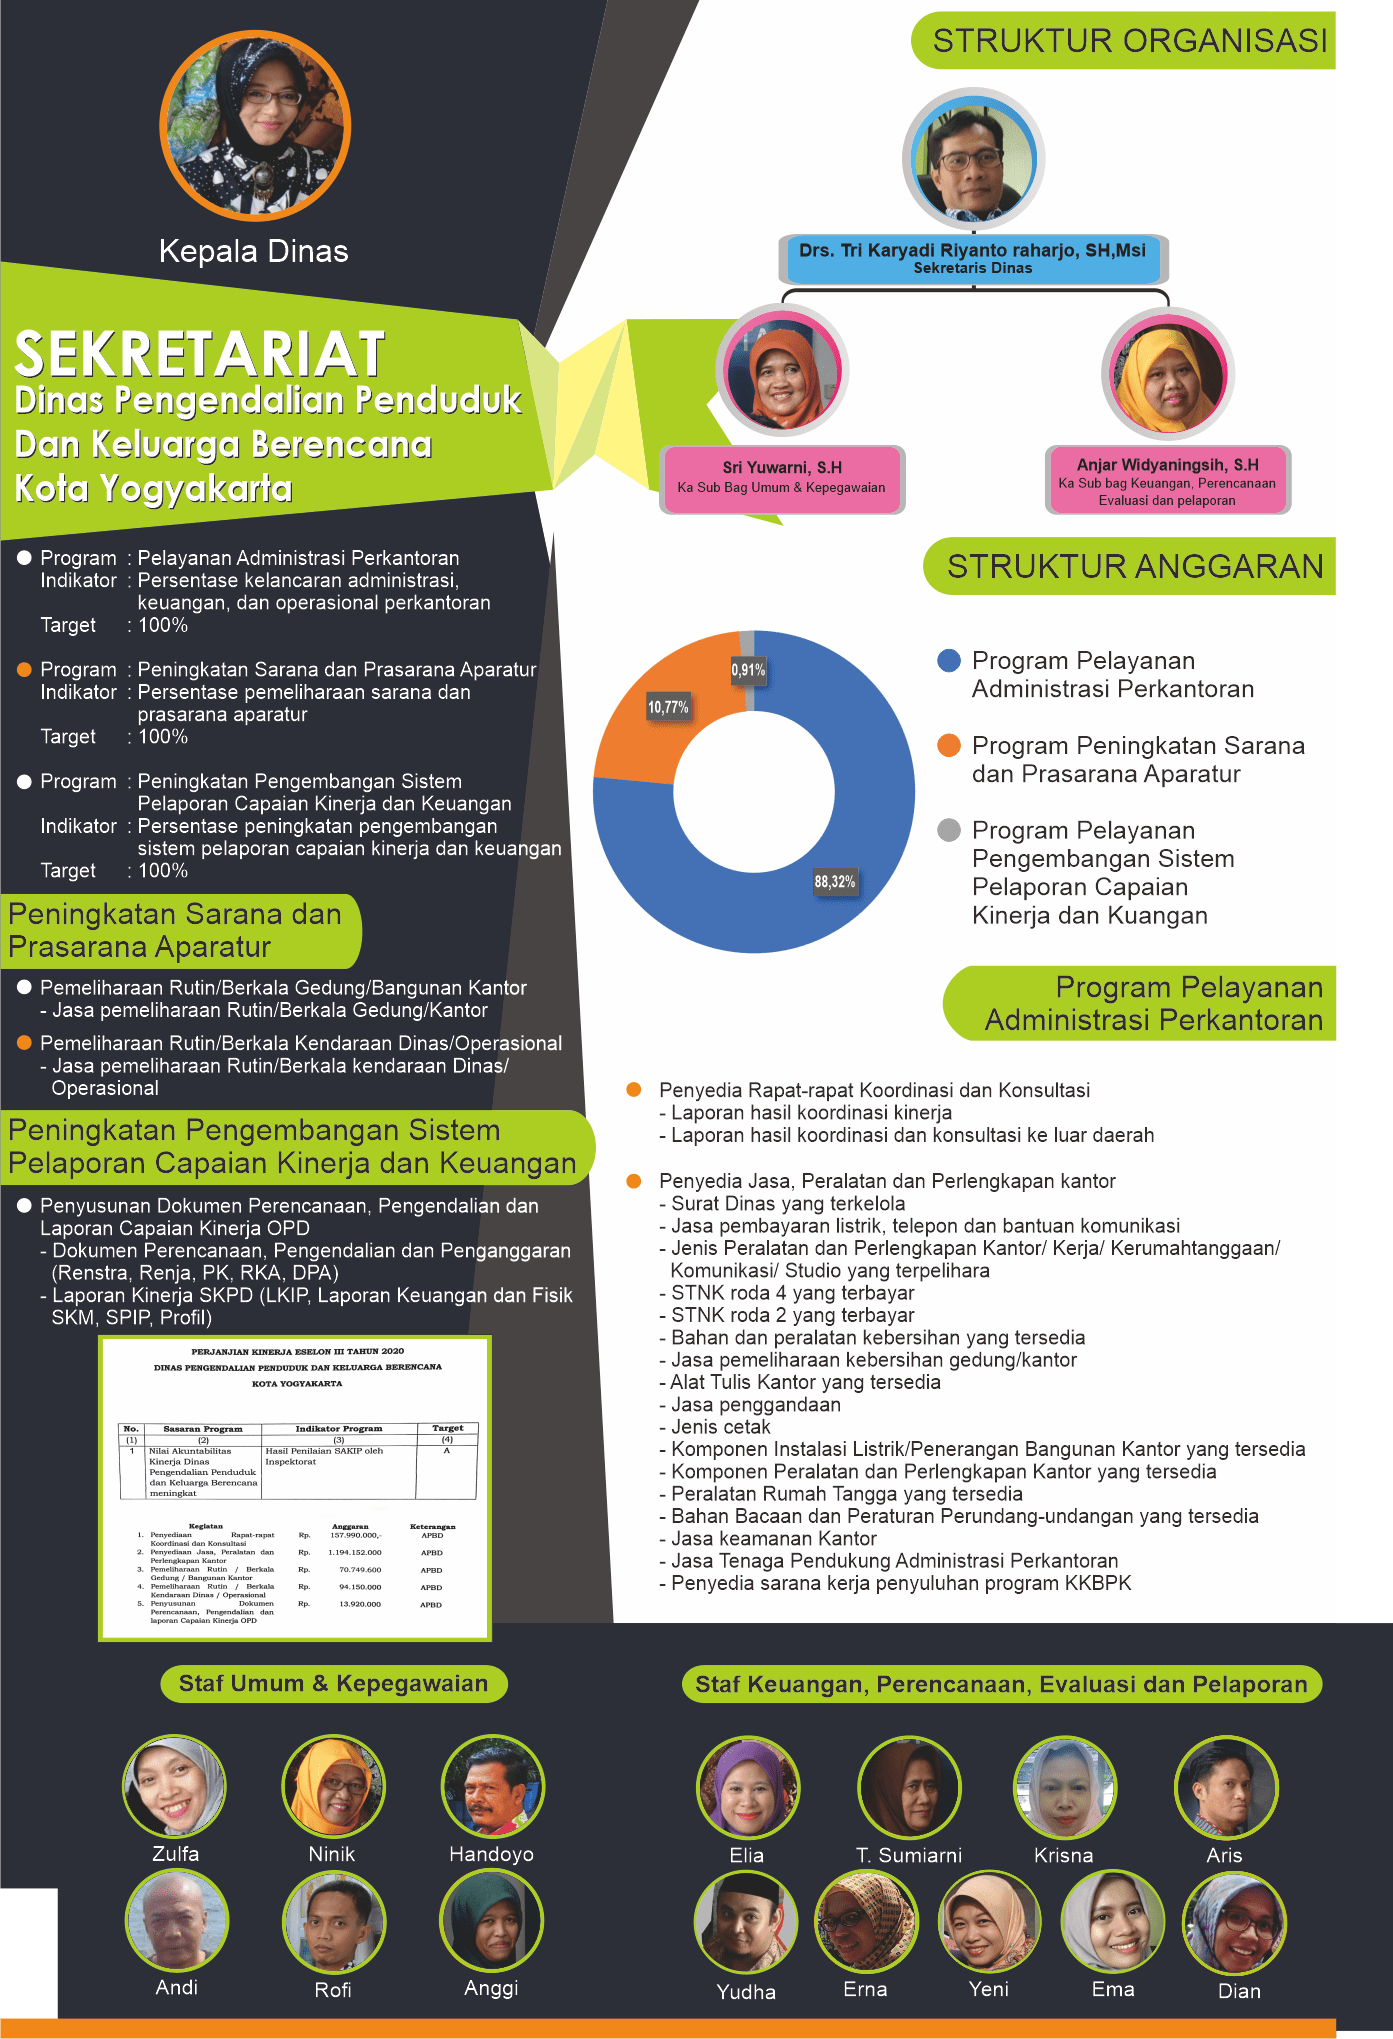 Koran Anggaran DPPKB Kota Yogyakarta -- Sekretariat 2020